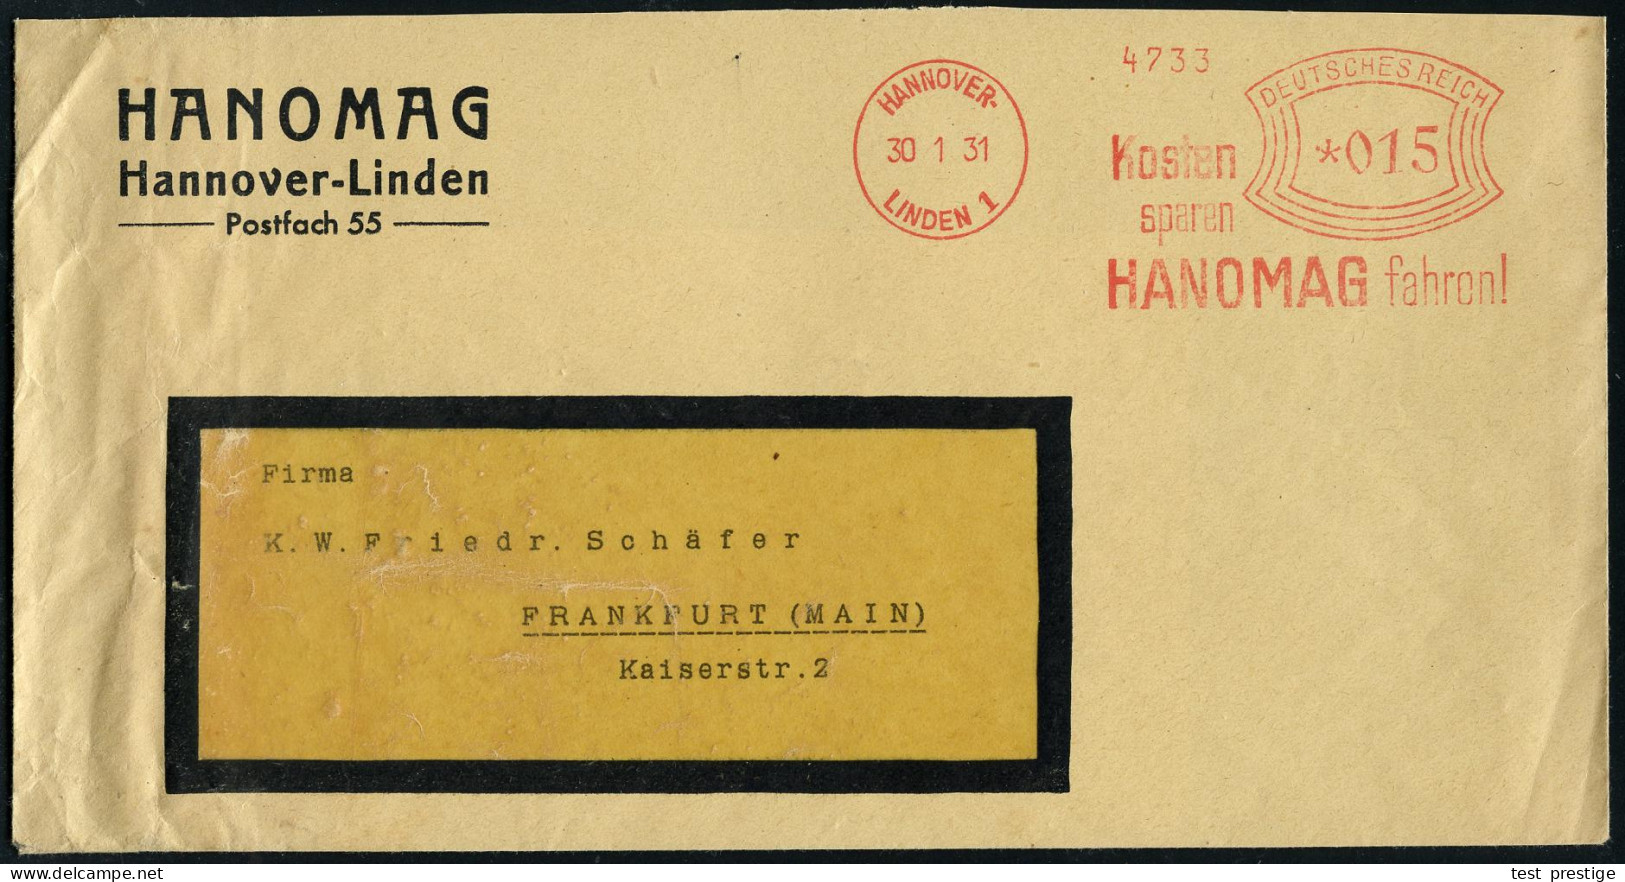 HANNOVER-/ LINDEN 1/ Kosten/ Sparen/ HANOMAG Fahren! 1931 (30.1.) AFS Francotyp Auf Firmen-Bf.: HANOMAG.. = Hersteller V - Camiones